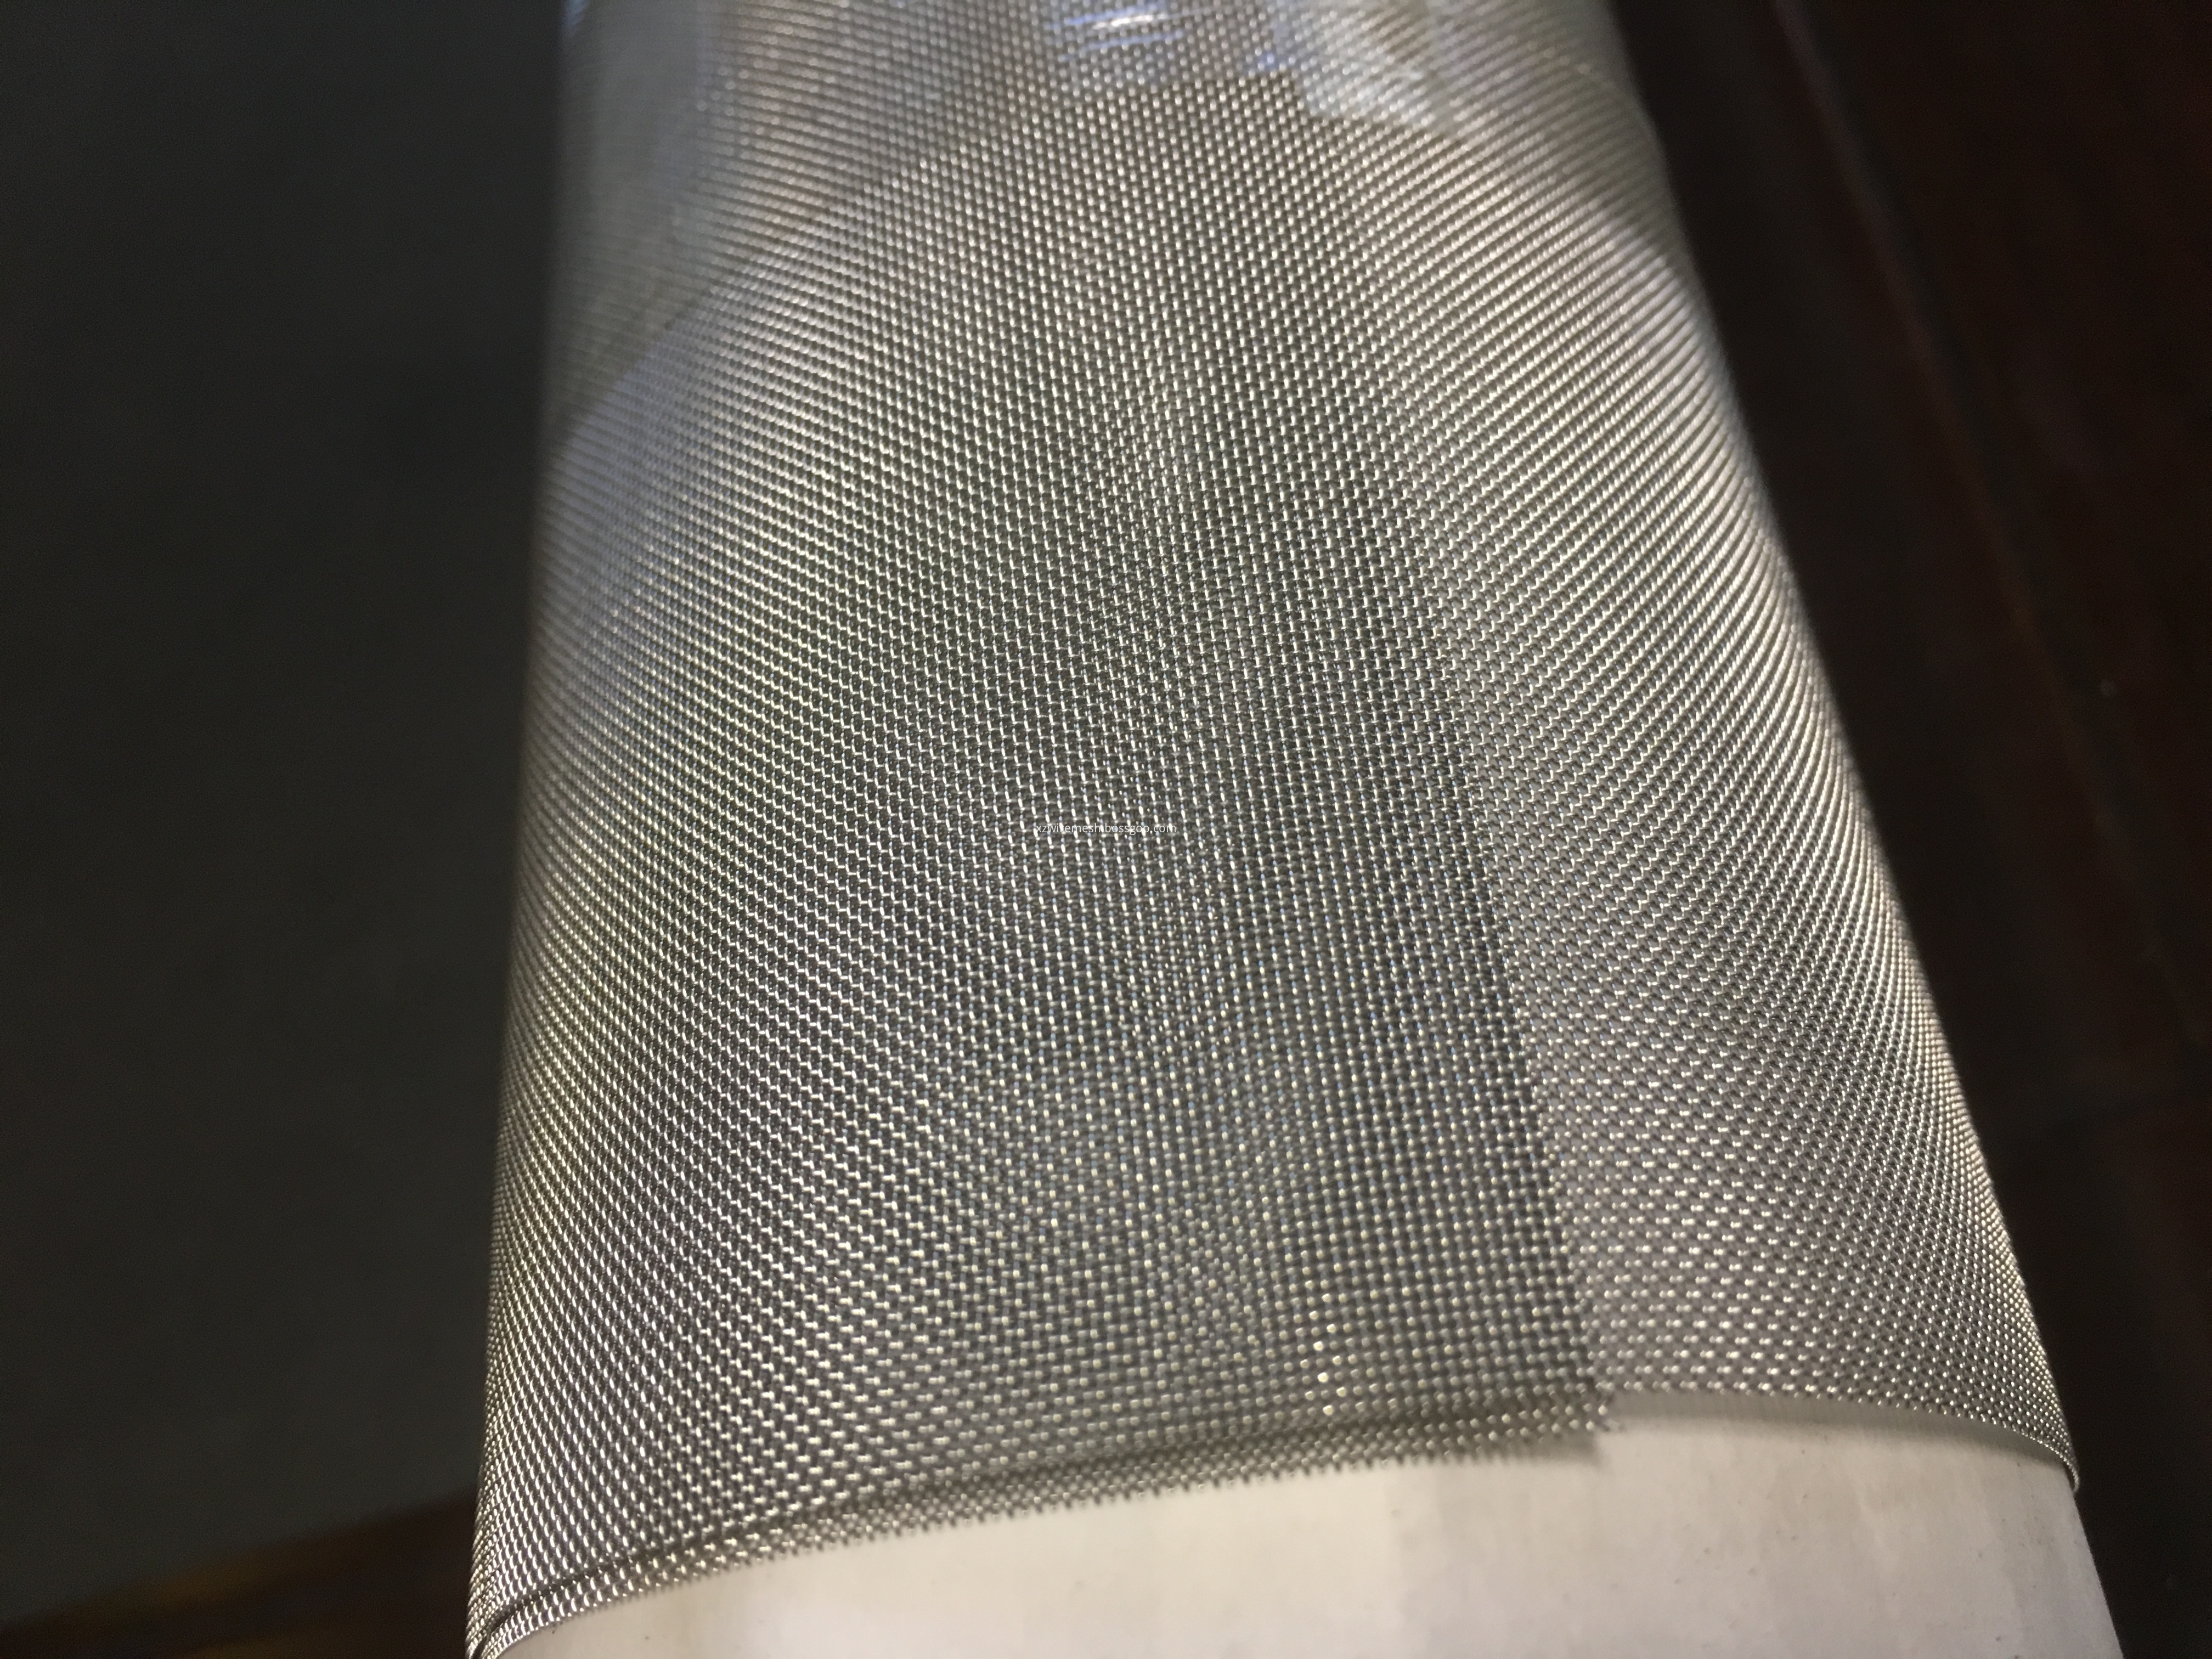 Woven steel mesh